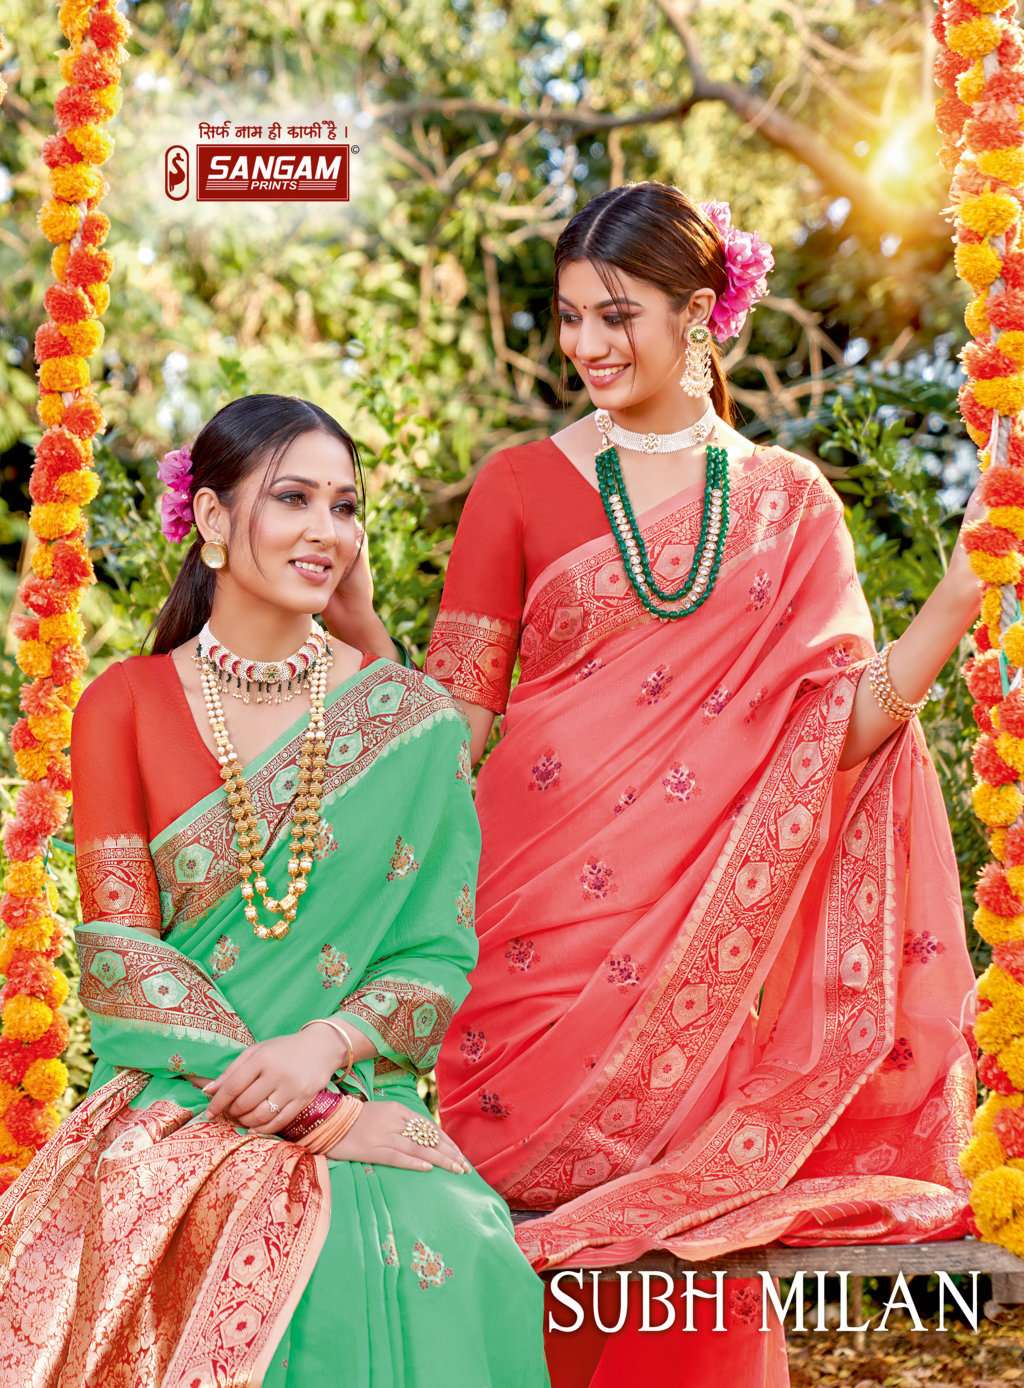 sangam prints subhmilan cotton saris wholesaler